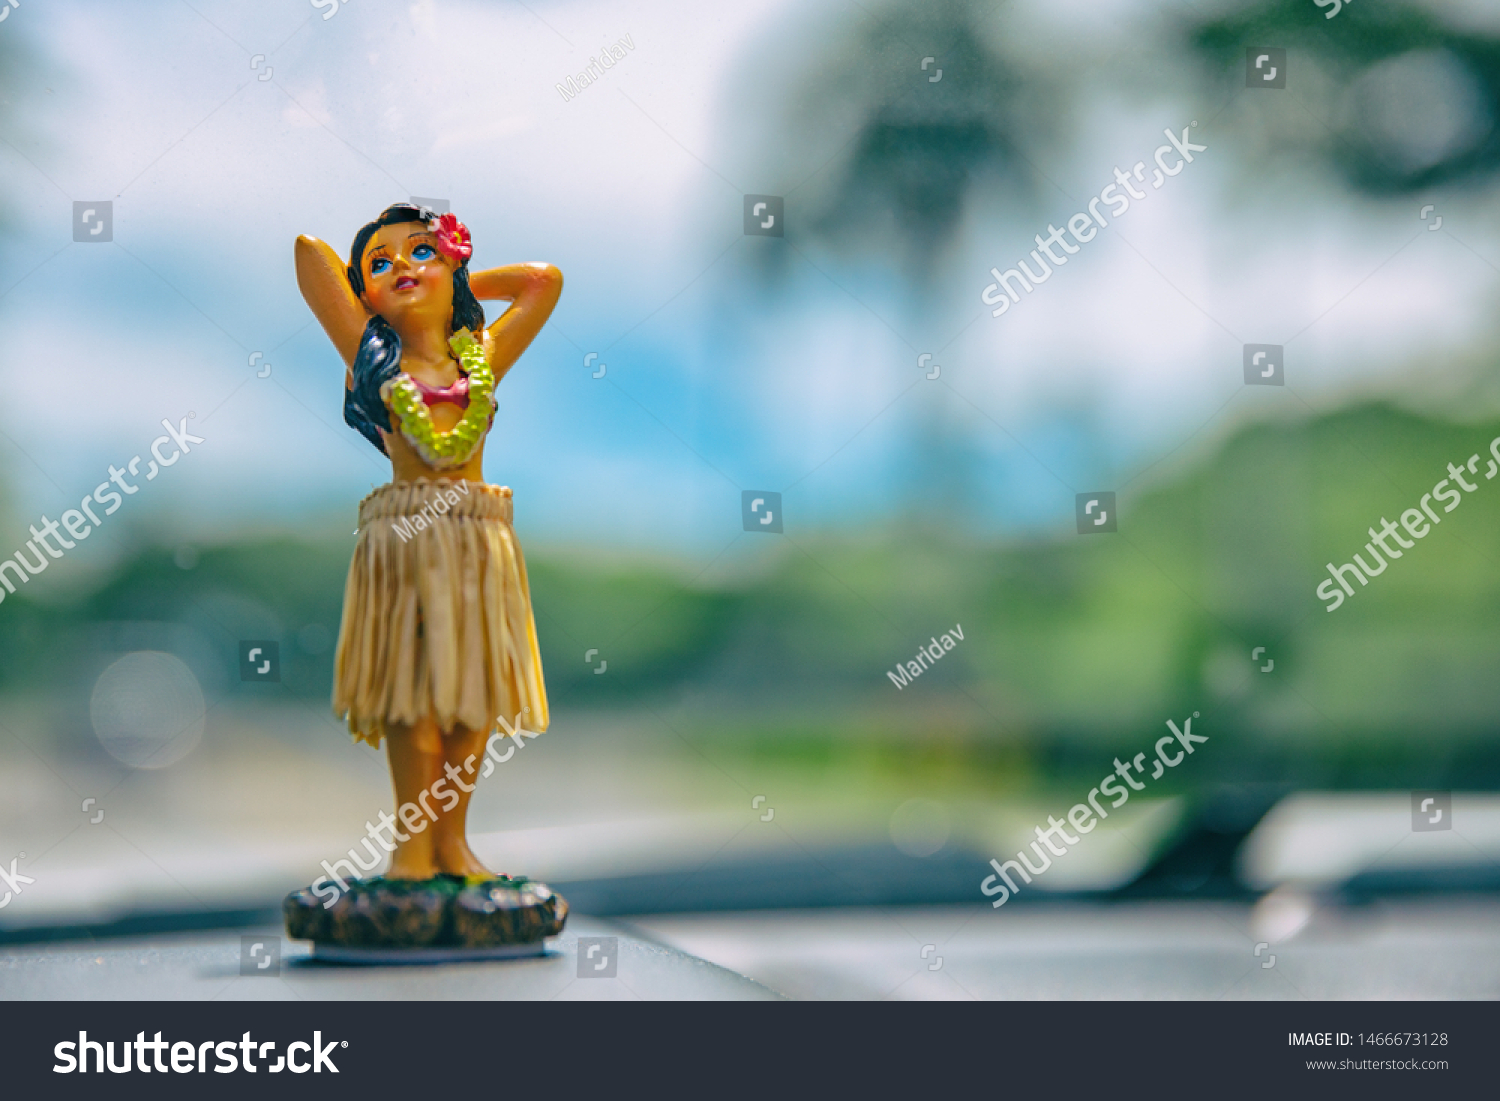 dancing doll in car